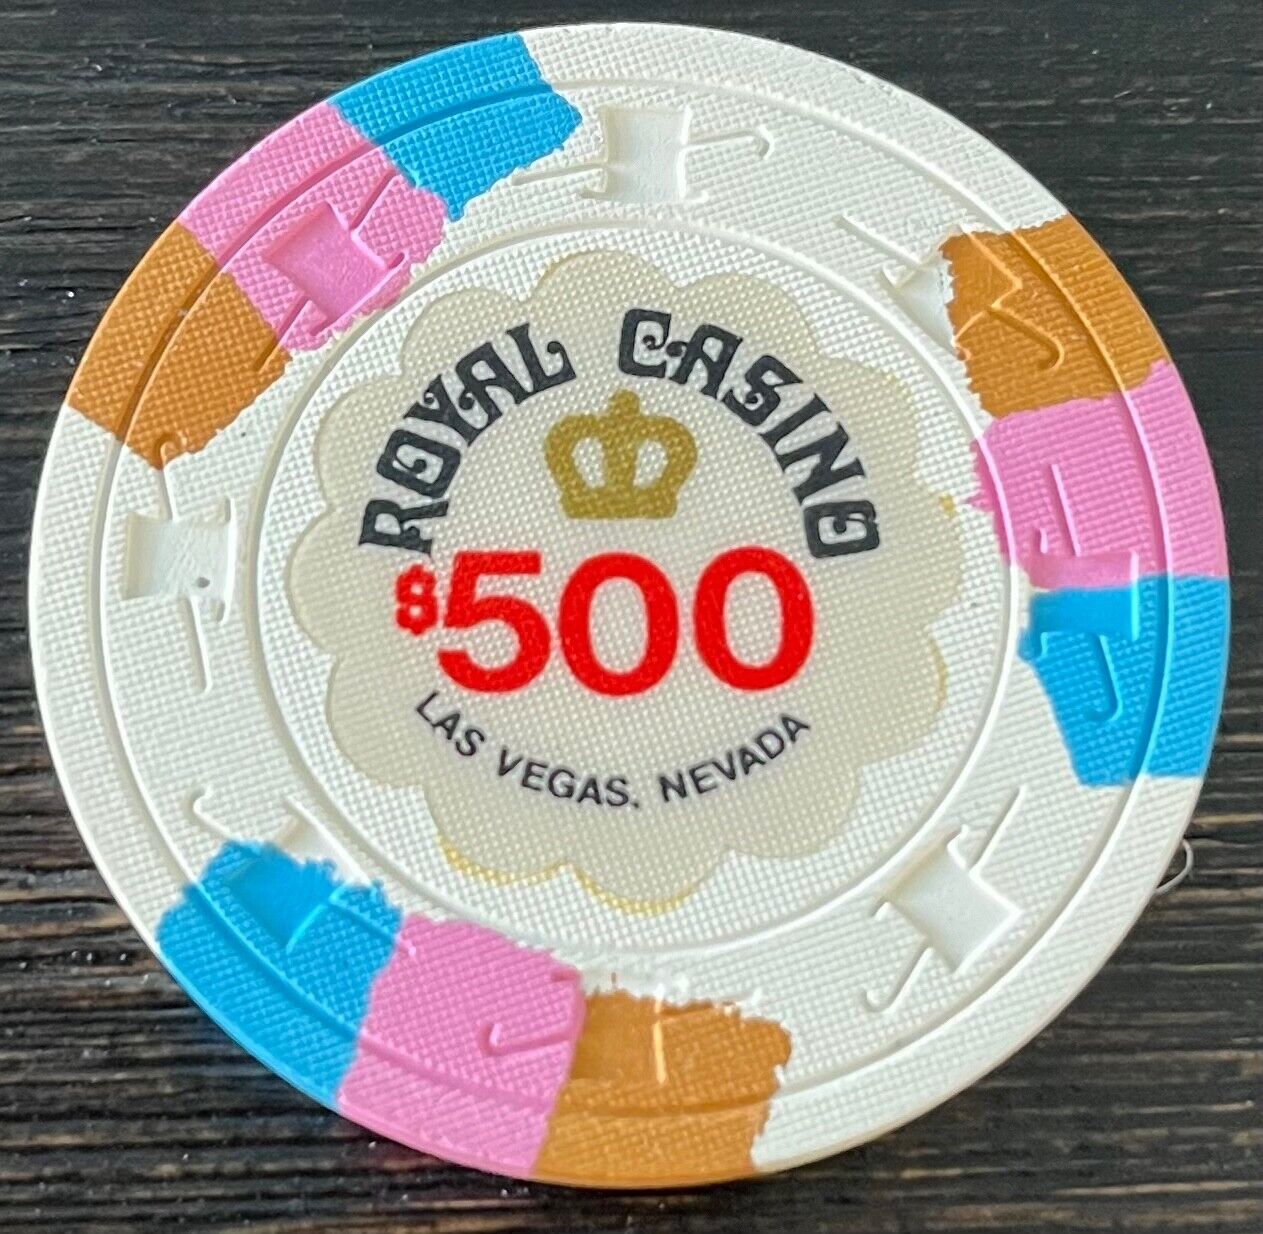 Royal Casino Hotel Las Vegas Nevada $500 Rare Obsolete Vintage Casino Chip